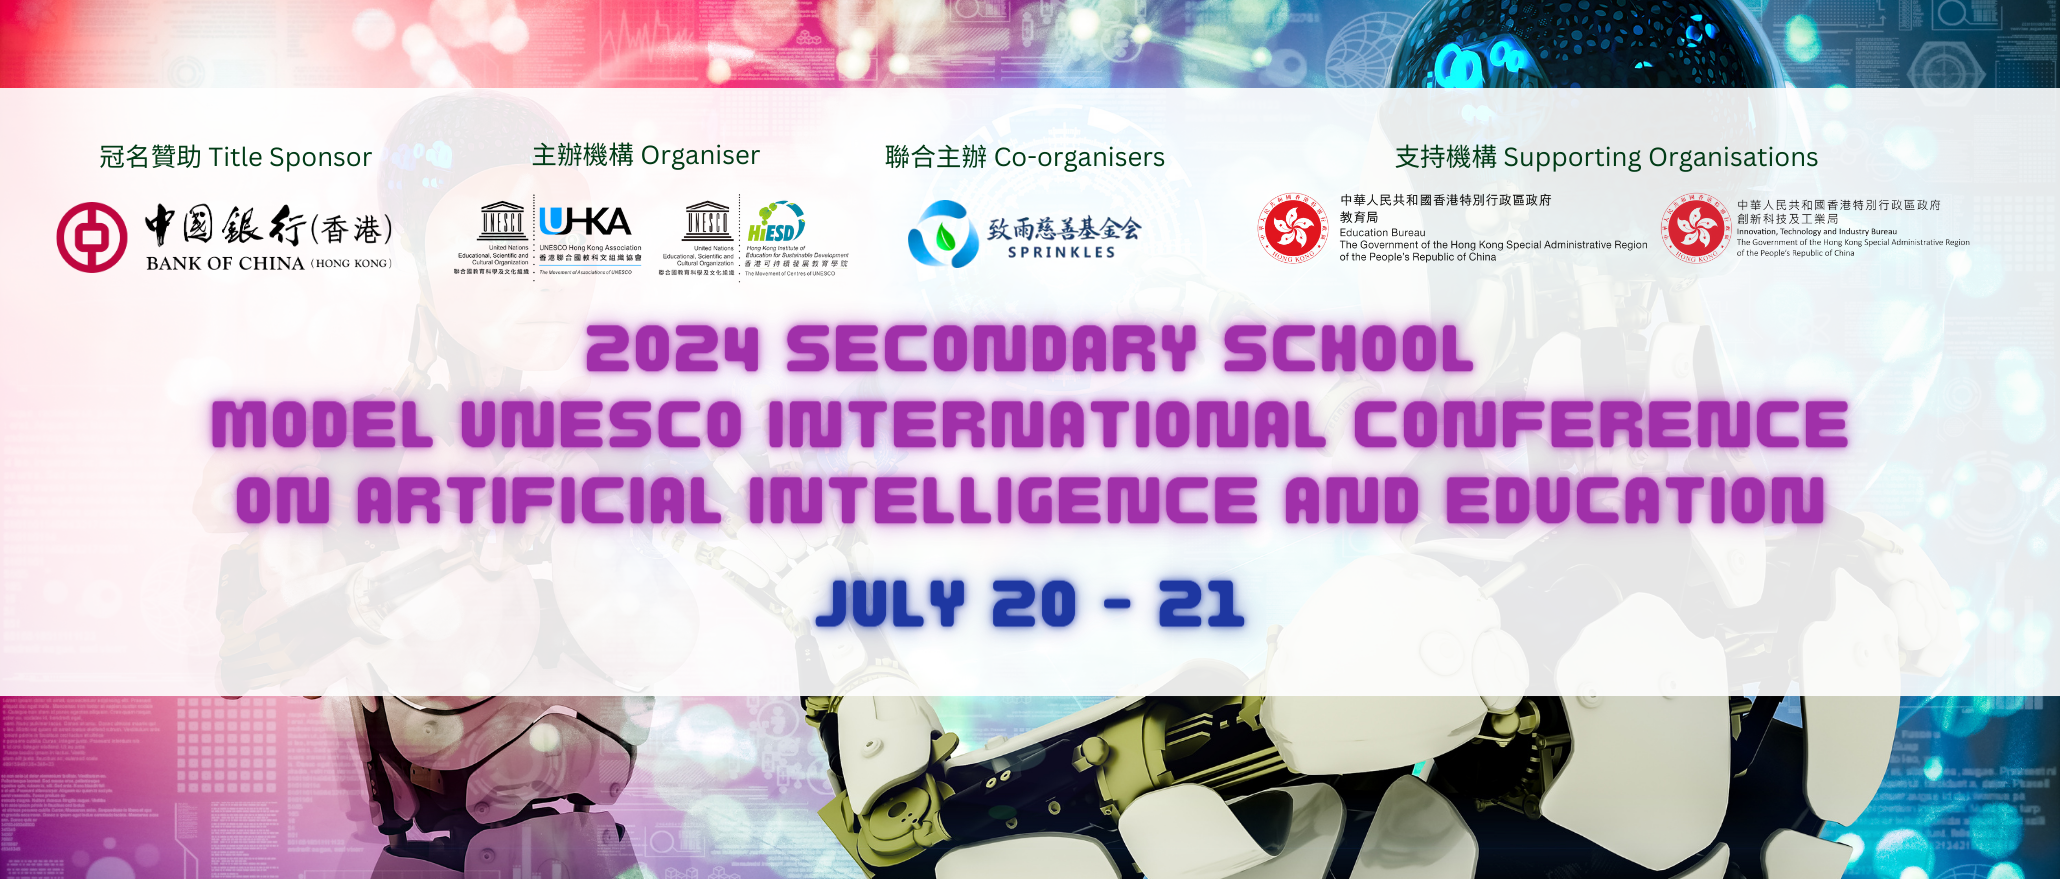 BOCHK | UNESCO HK - 20204 Secondary School Model UNESCO International Conference on Artificial Intelligence and Education